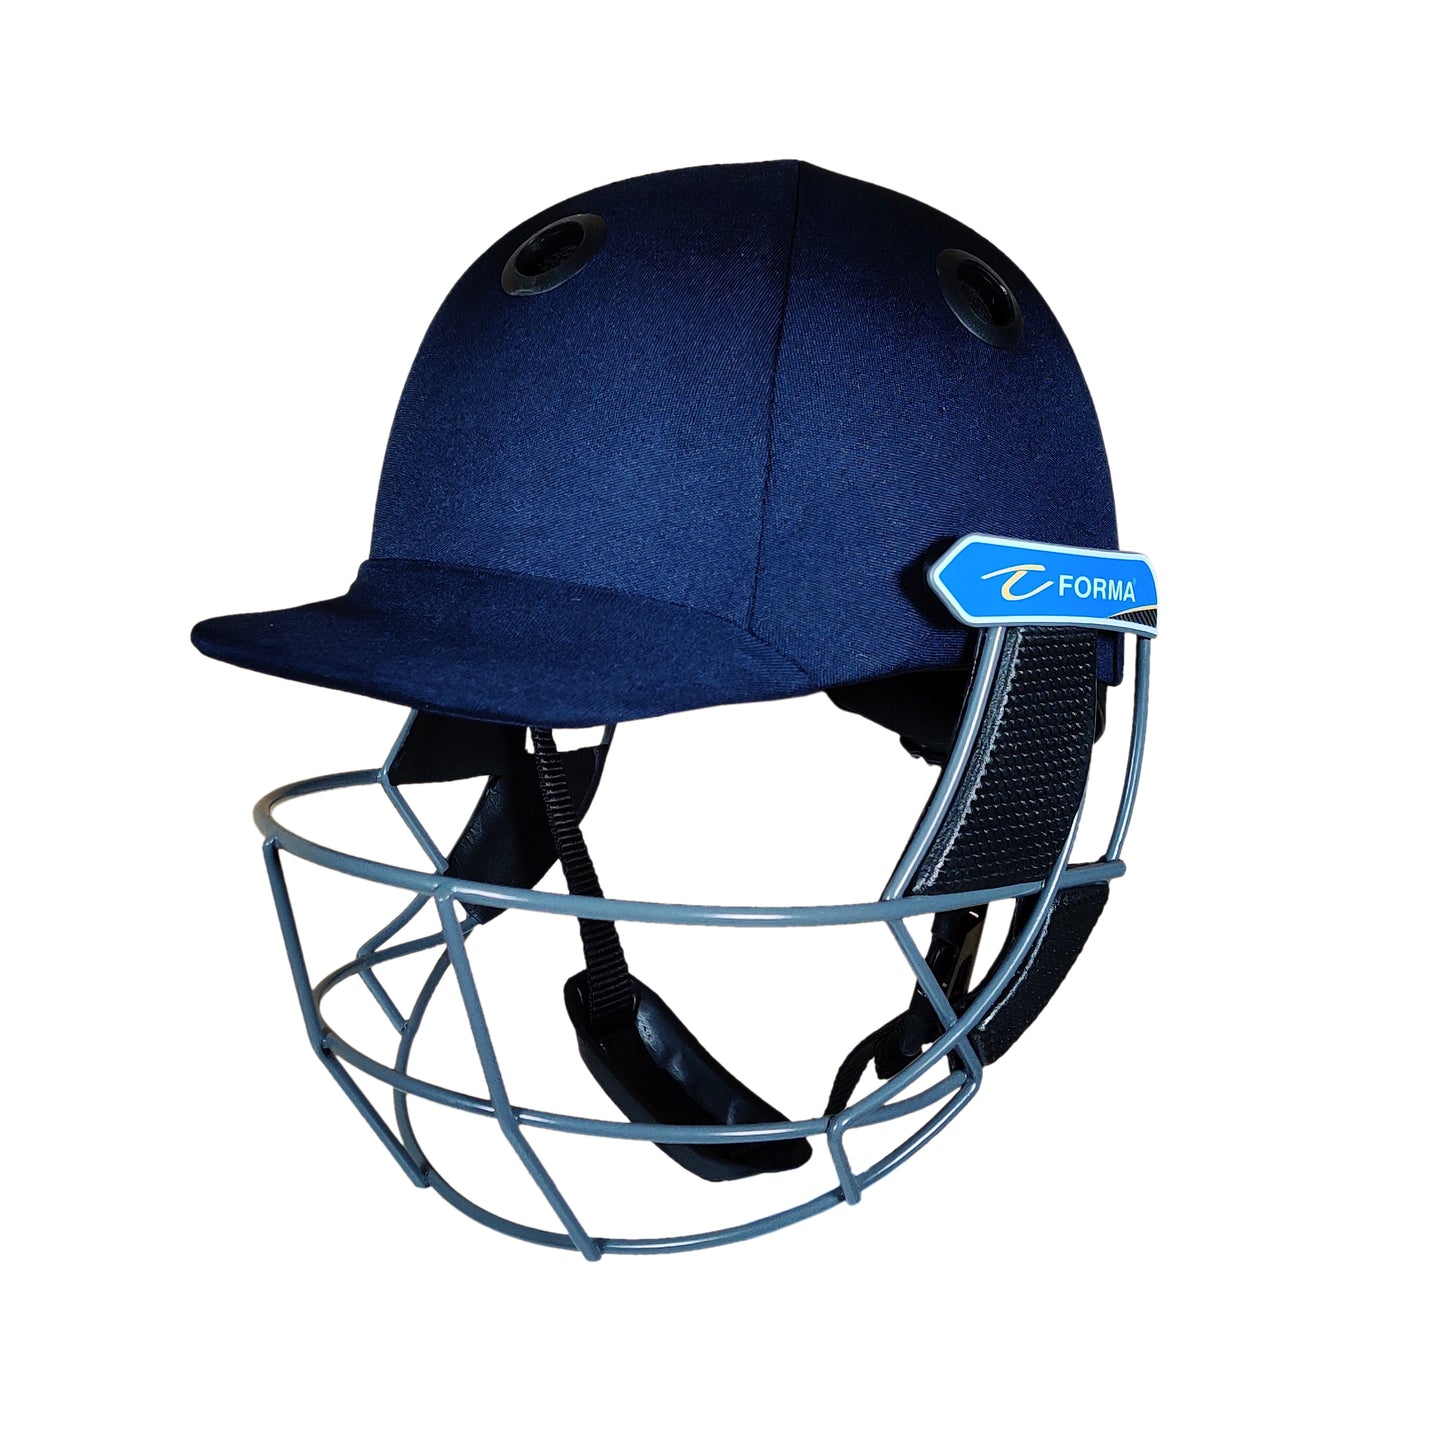 Forma Carbon X Lite MST Mild Steel Cricket Helmet - Best Price online Prokicksports.com